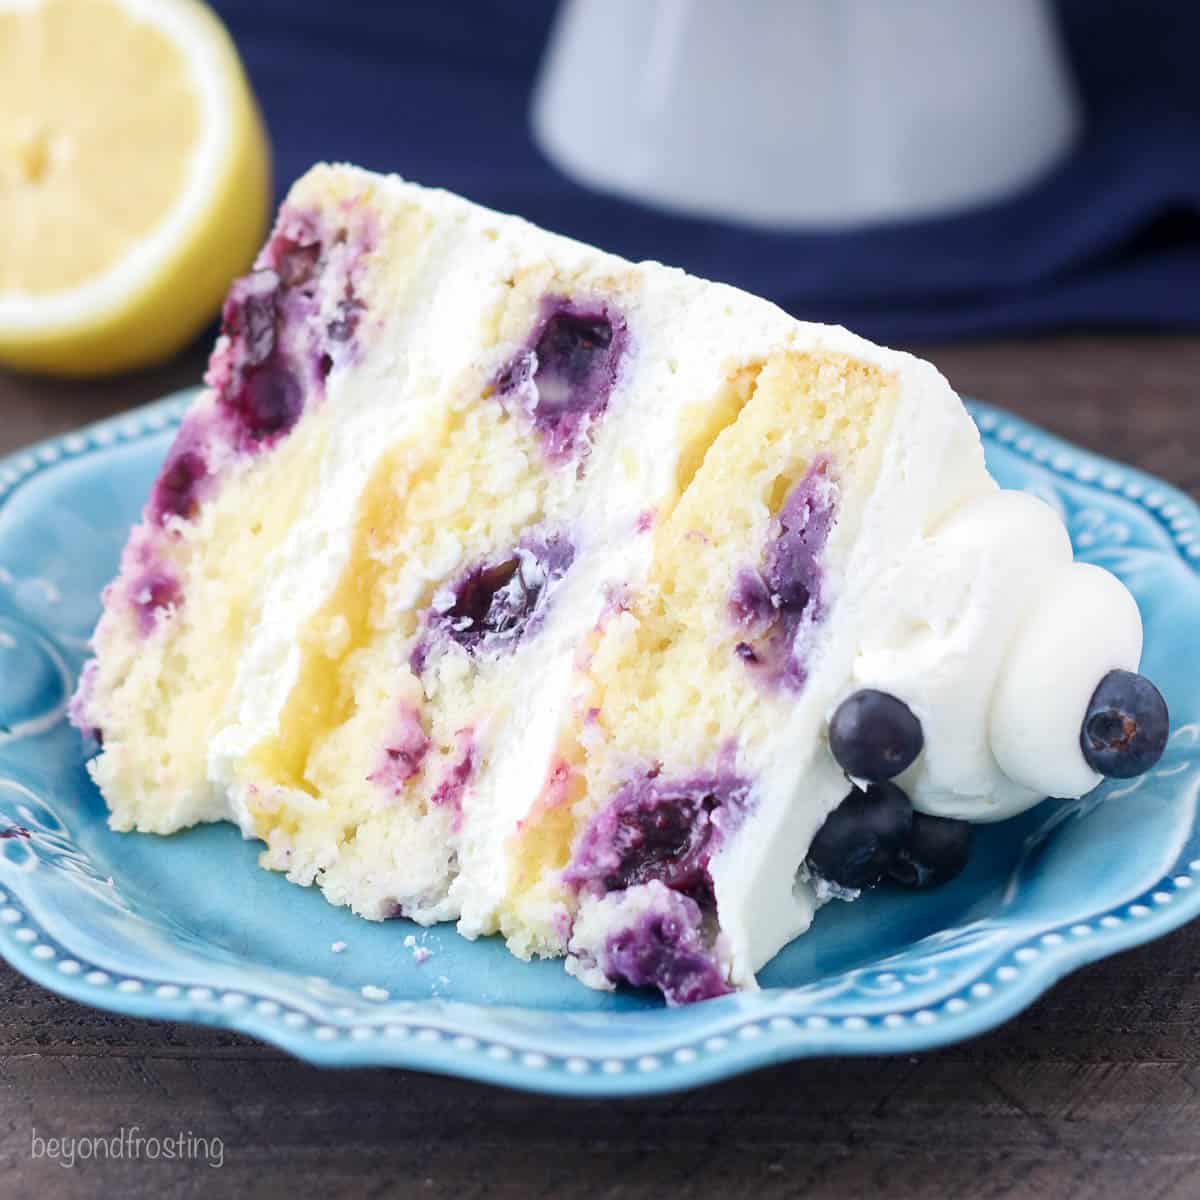 Lemon Blueberry Cream Cheese Coffee Cake - The Recipe Rebel